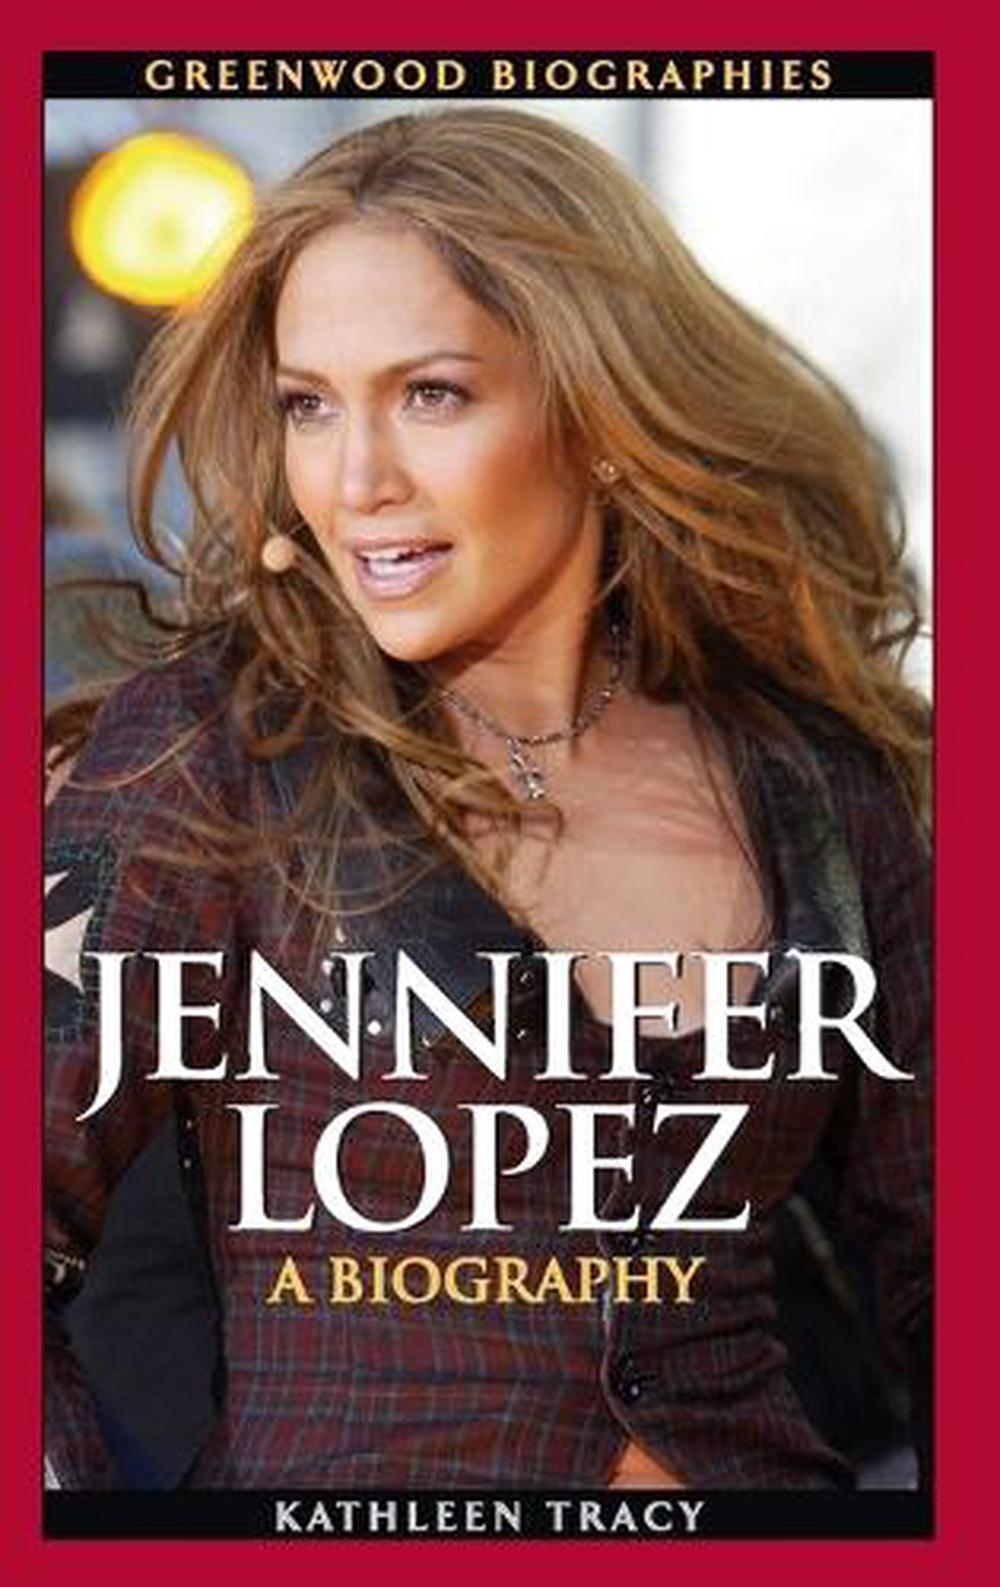 biography of jennifer lopez in english